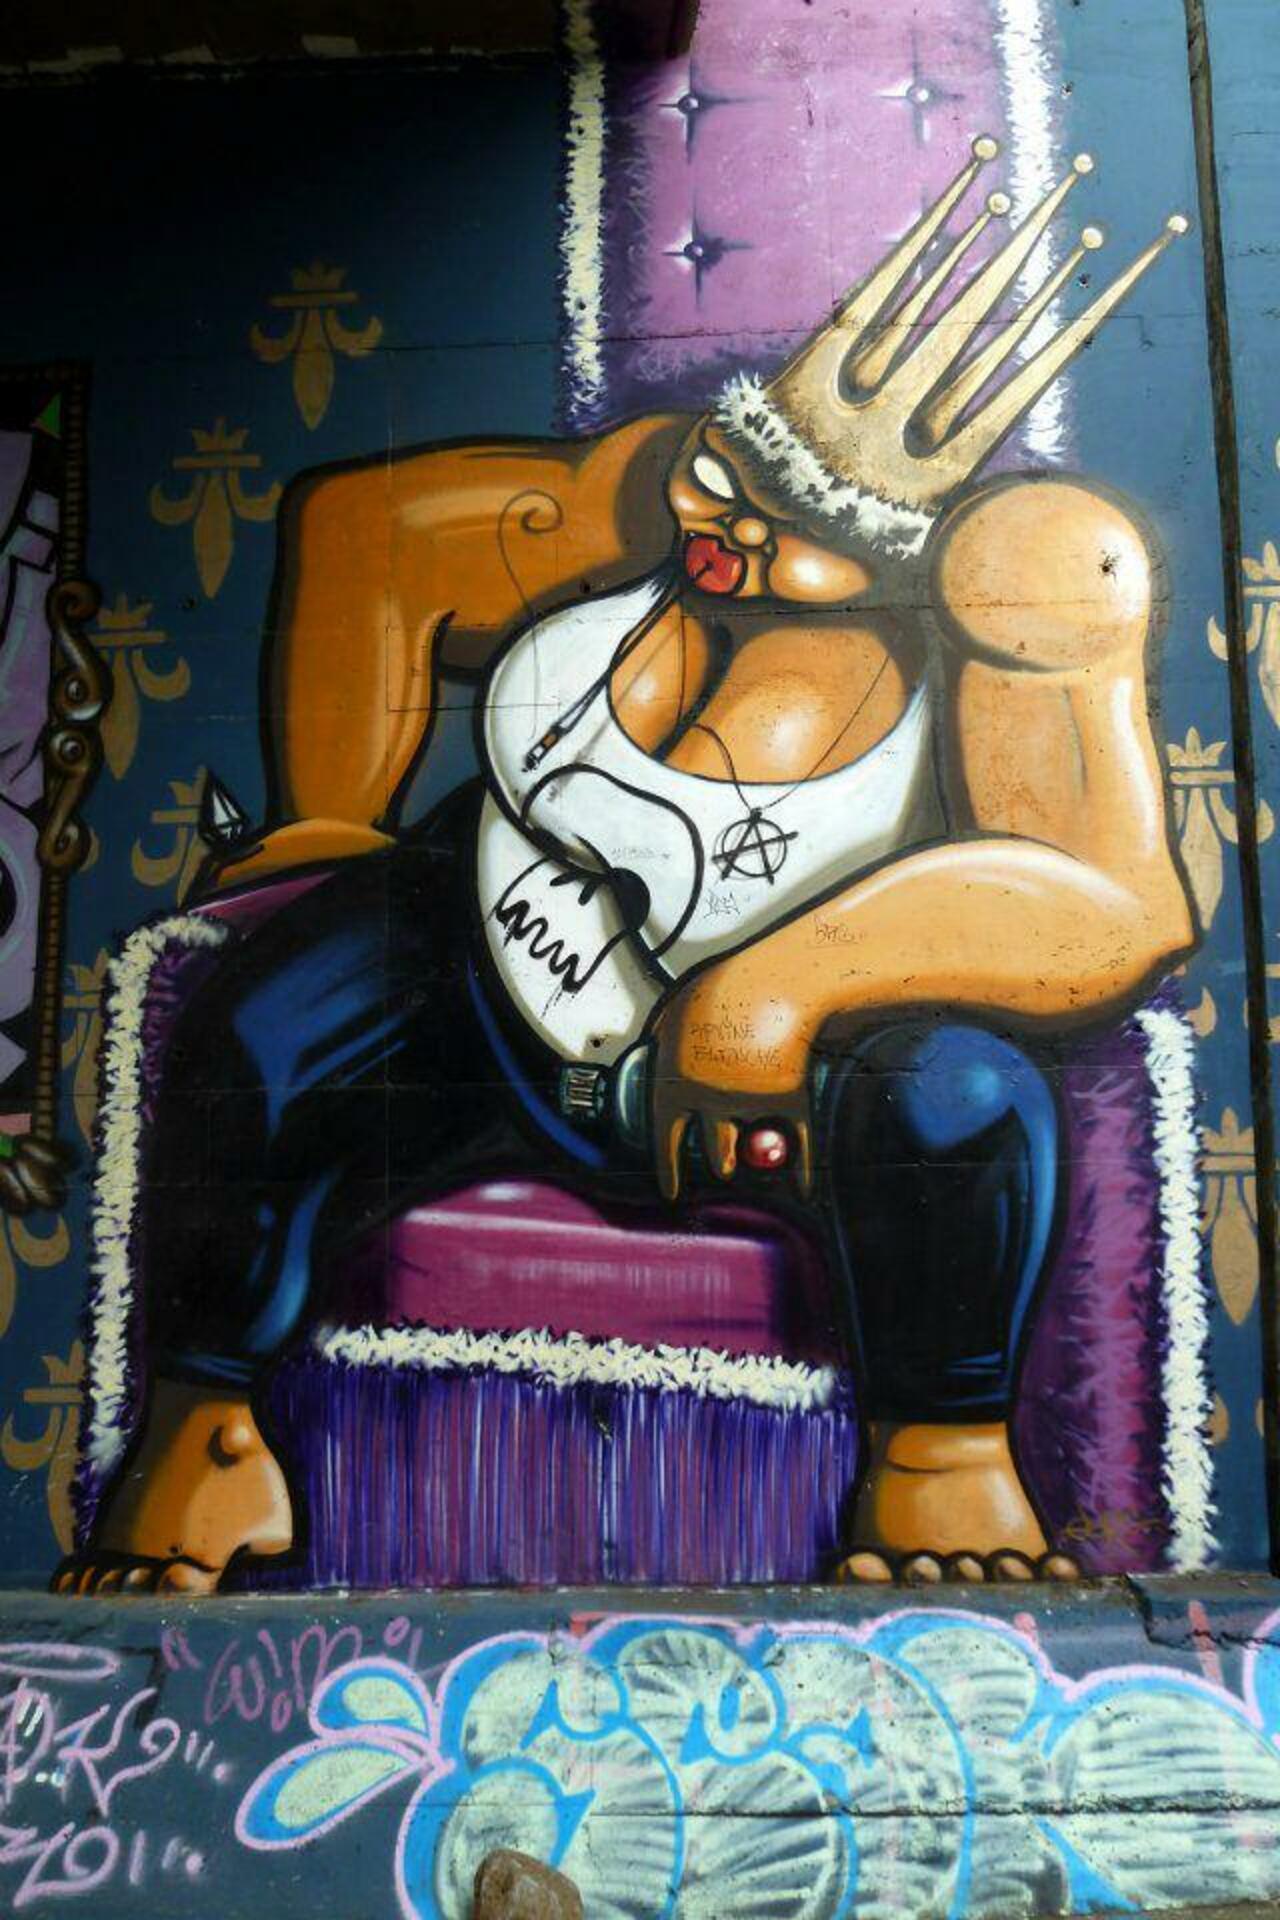 RT @5putnik1: Corrupted Revolution  • #streetart #graffiti #revolution #art #funky #dope . : http://t.co/pUlKvrn9Gy